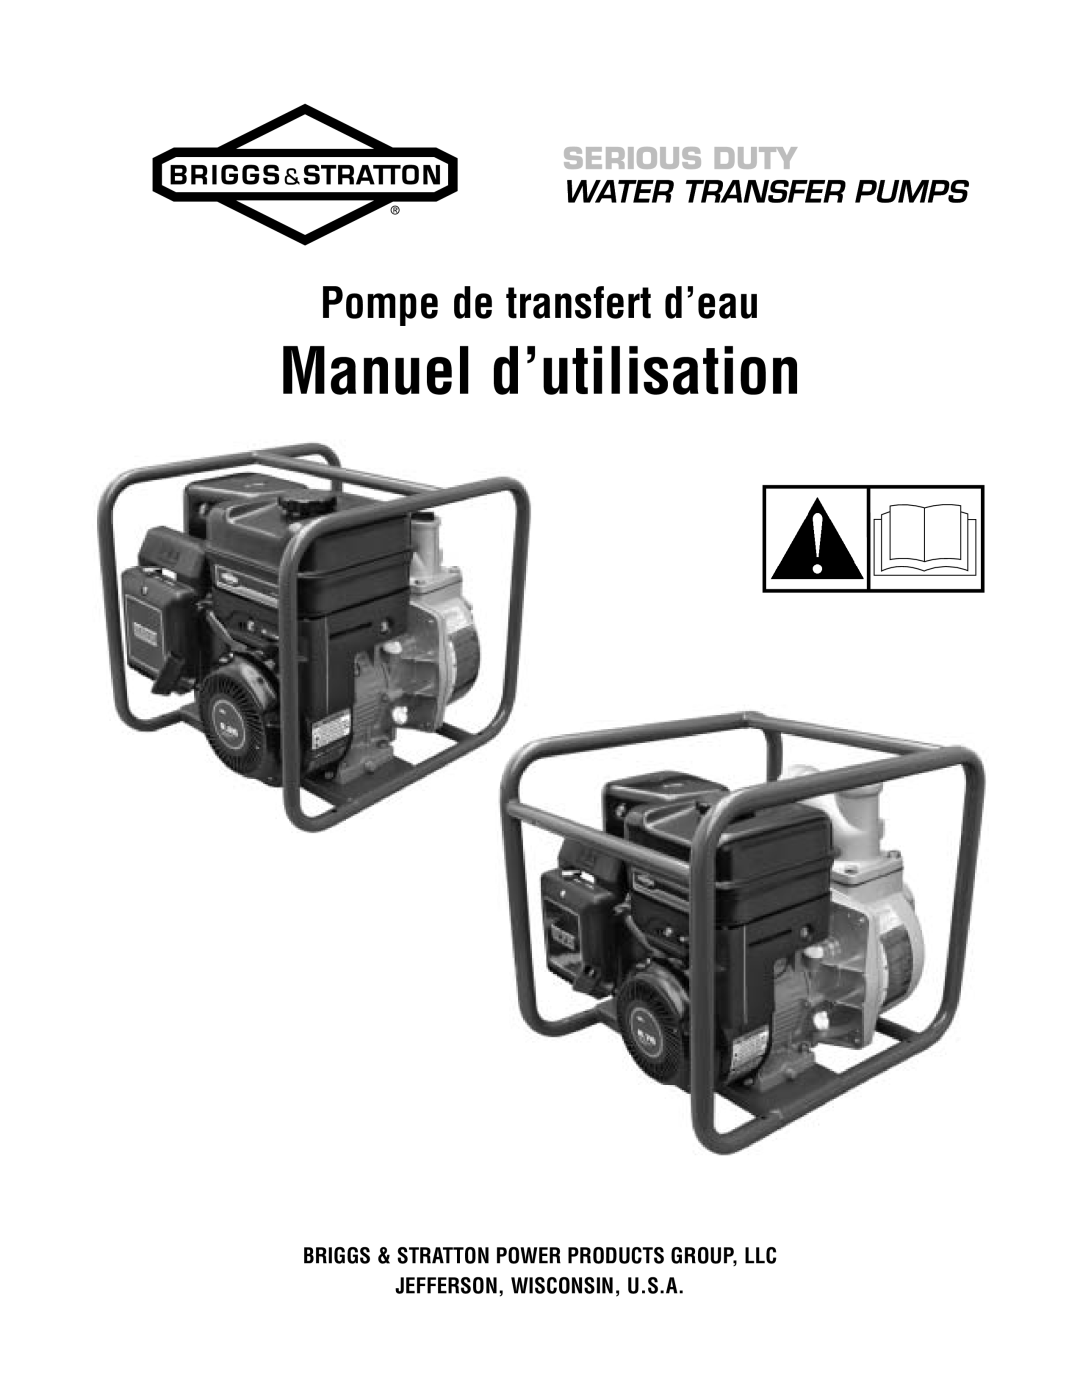 Briggs & Stratton Water Transfer Pump manual Manuel d’utilisation, Pompe de transfert d’eau, Jefferson, Wisconsin, U.S.A 